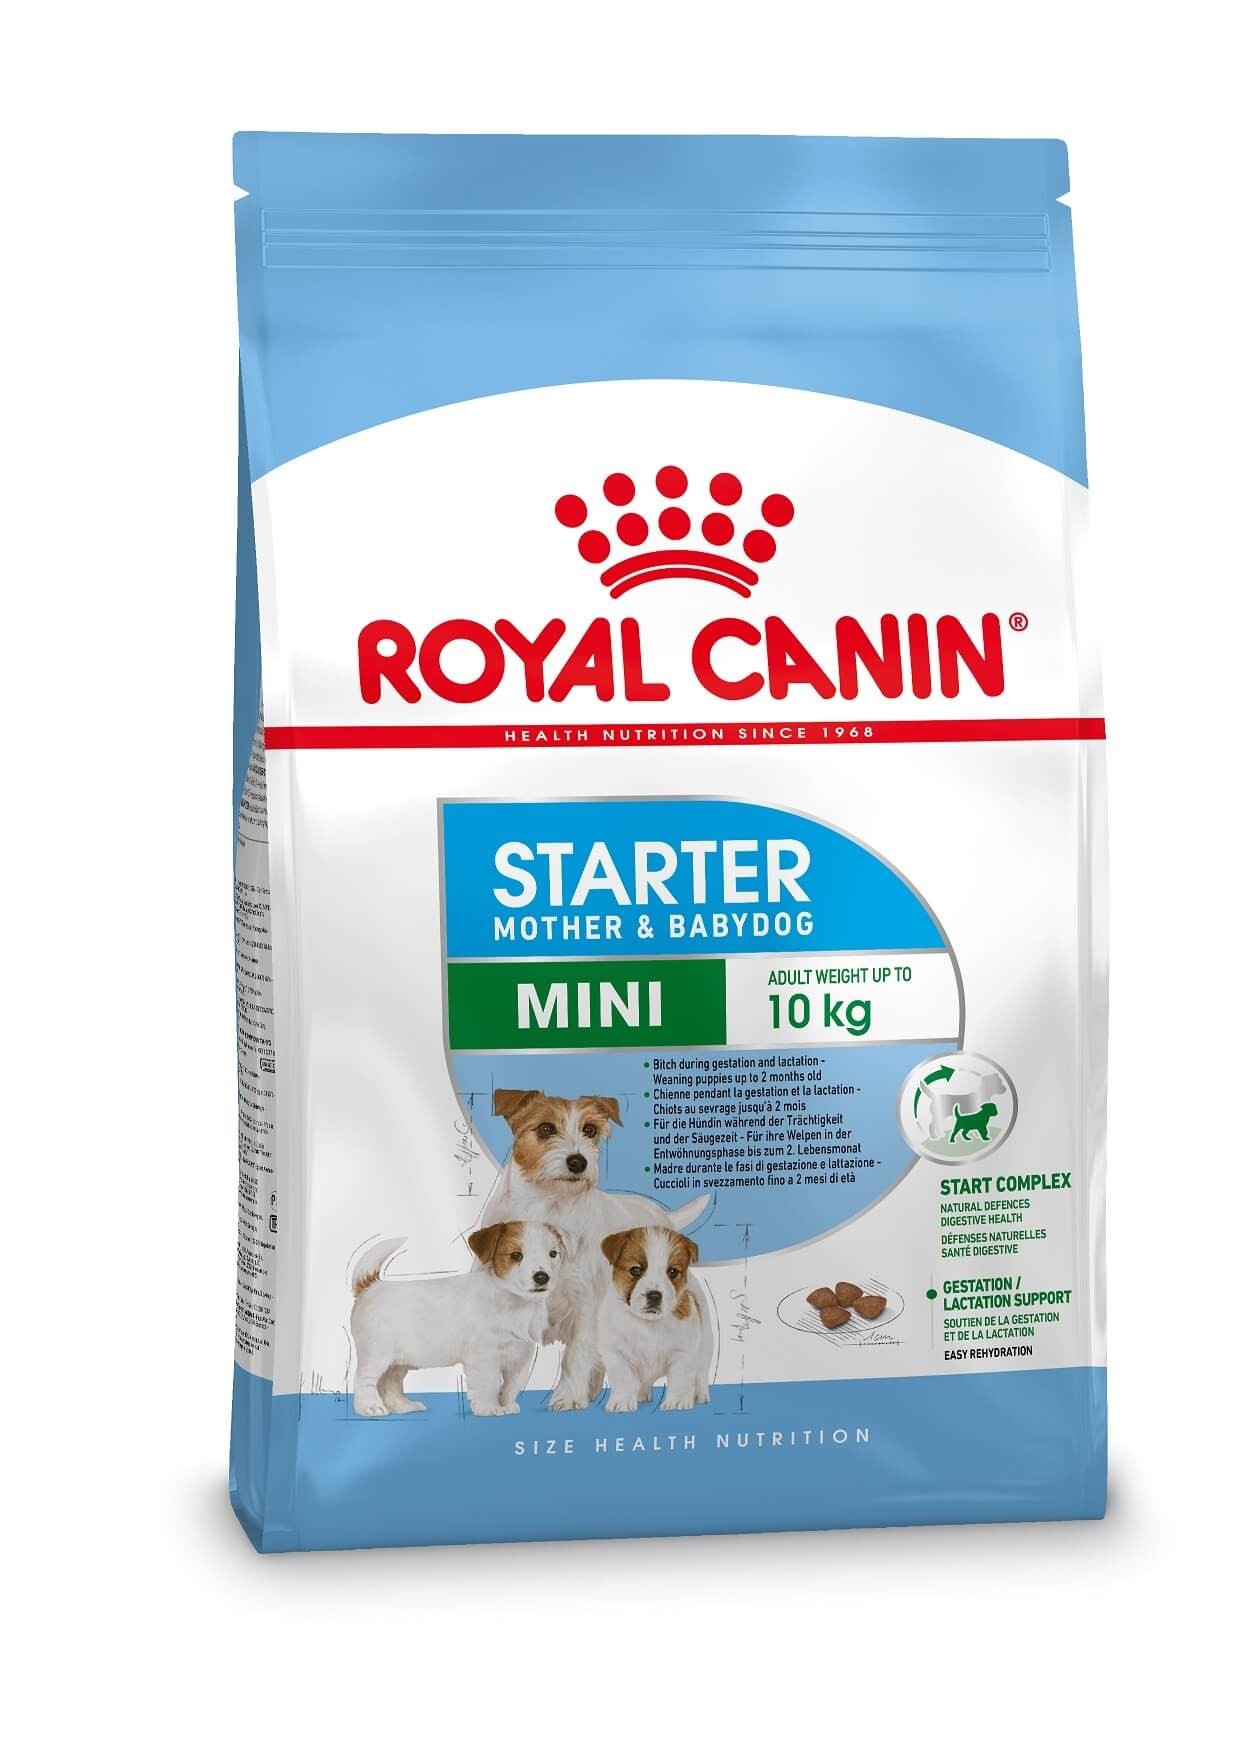 Royal Canin Mini Starter Mother and Babydog hundofder